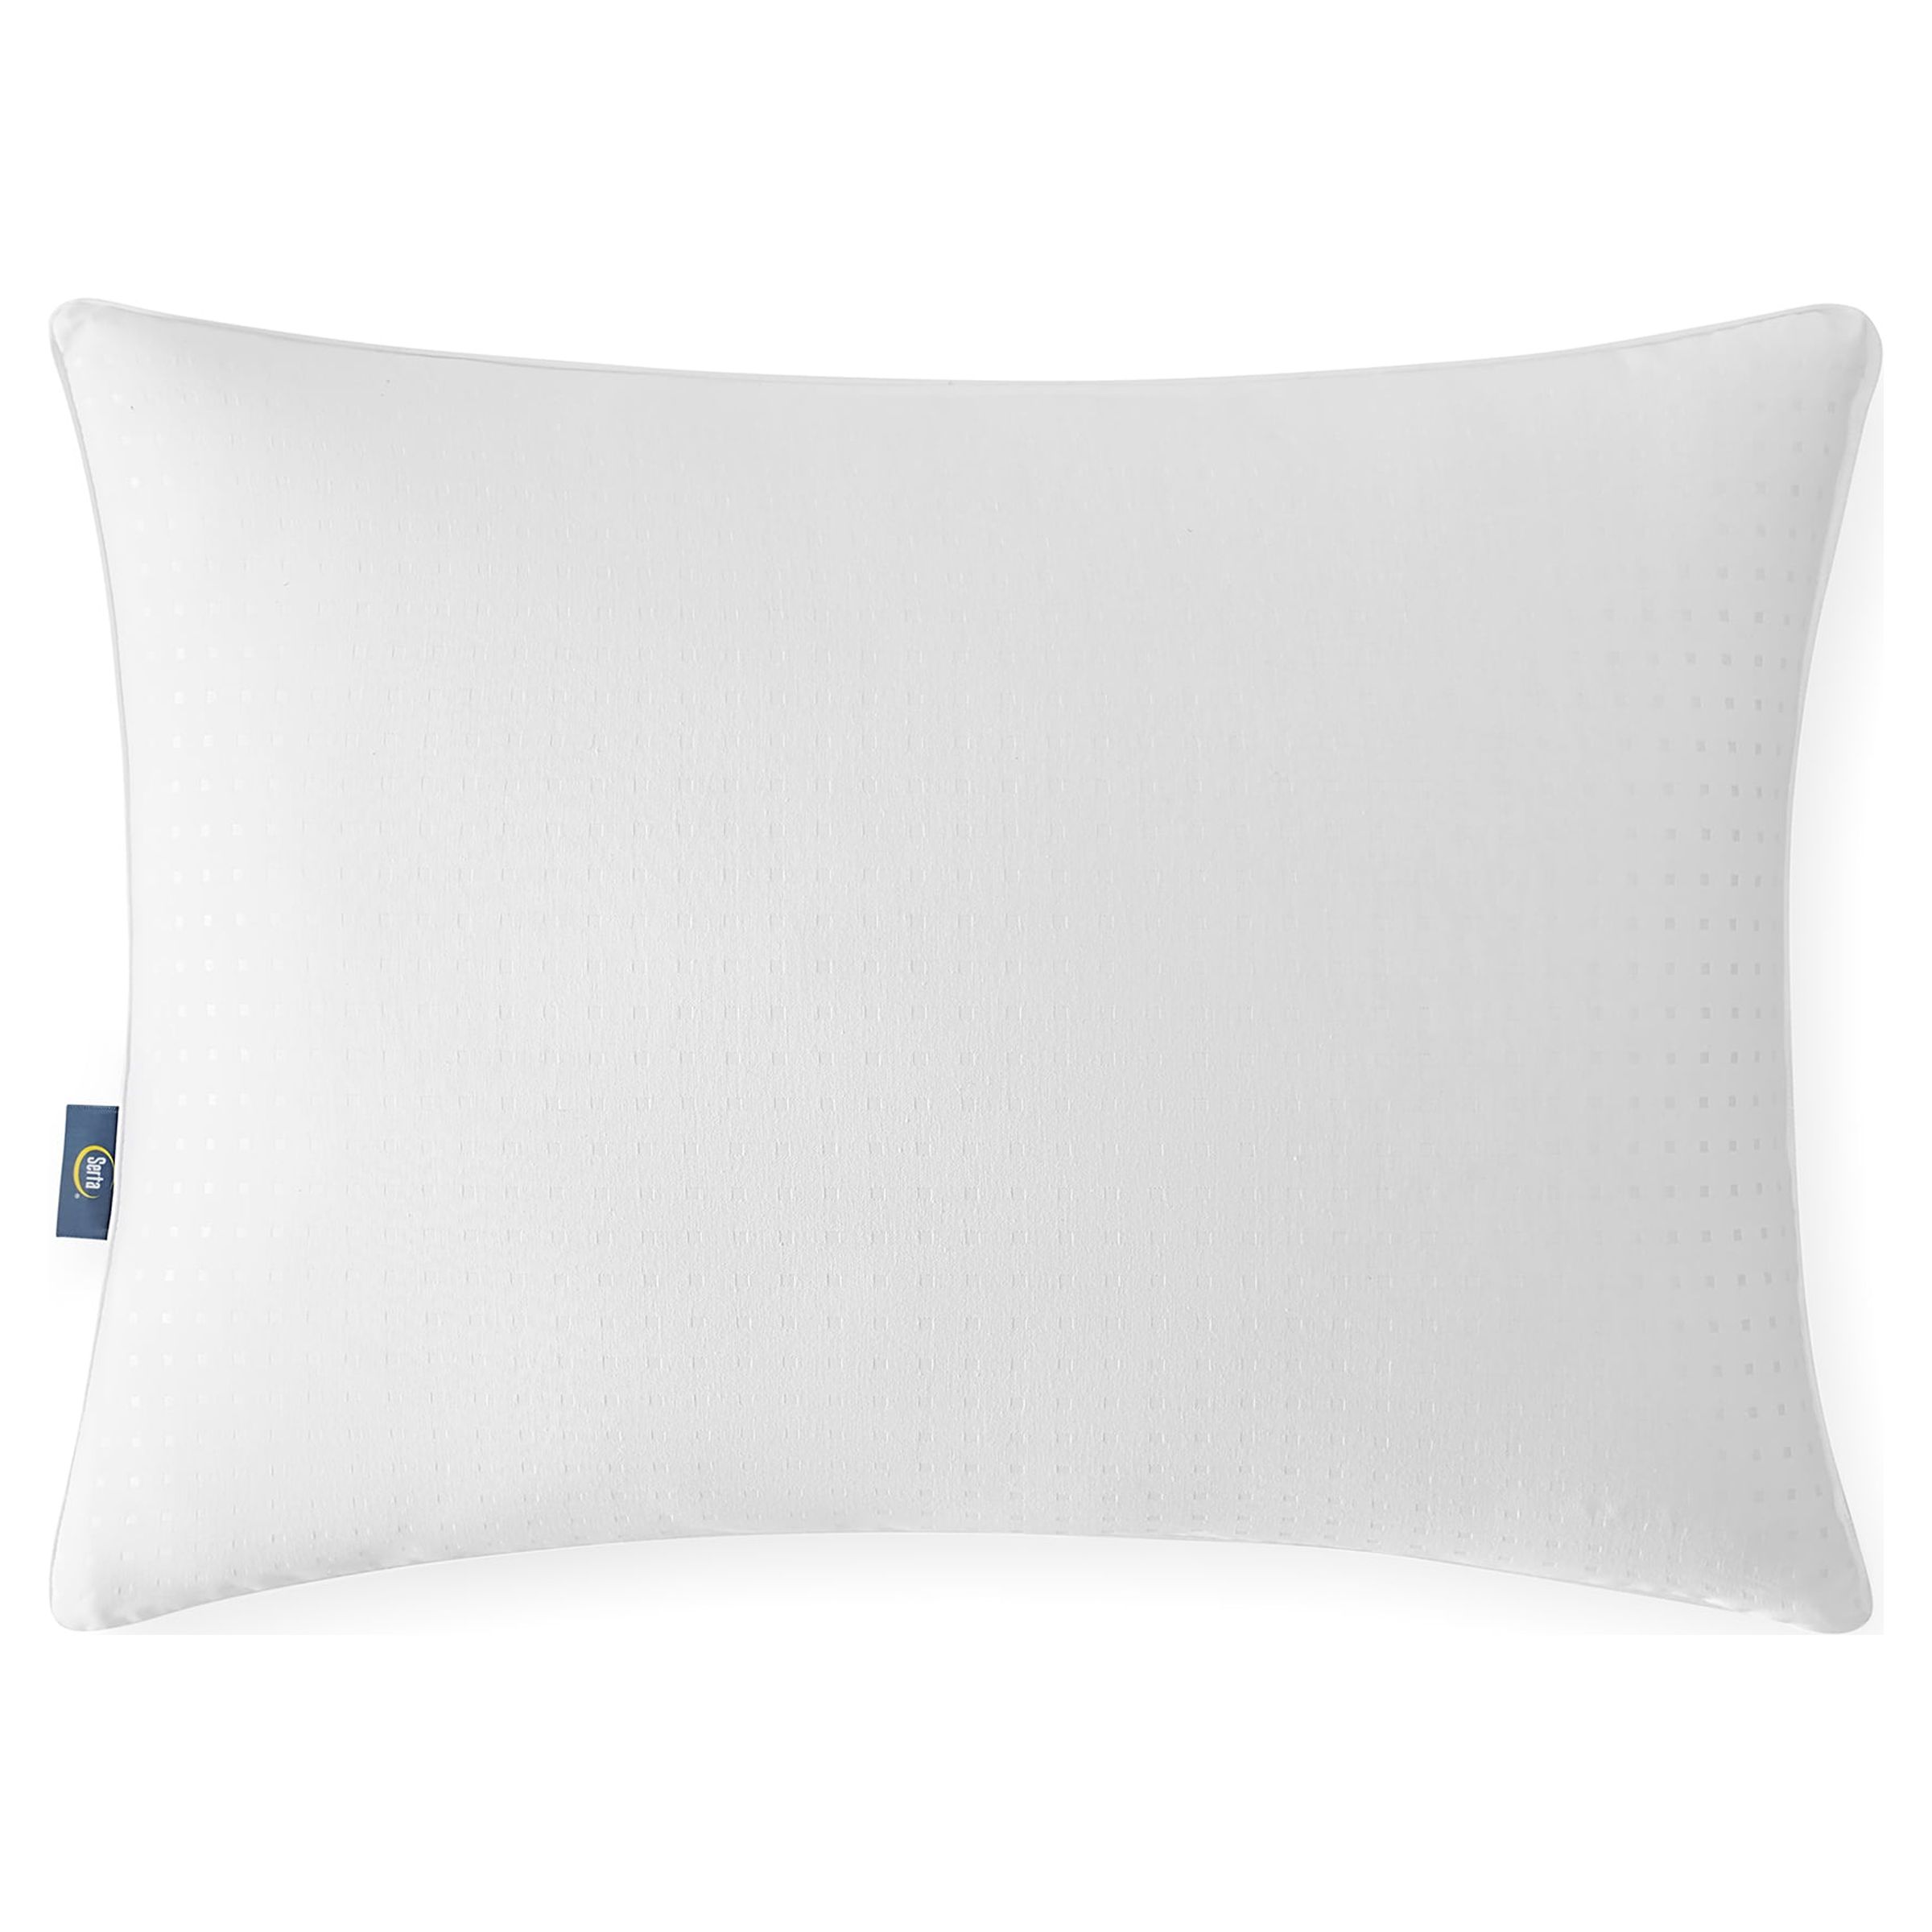 Sertapedic Won't Go Flat Bed Pillow, Standard/Queen - image 2 of 5